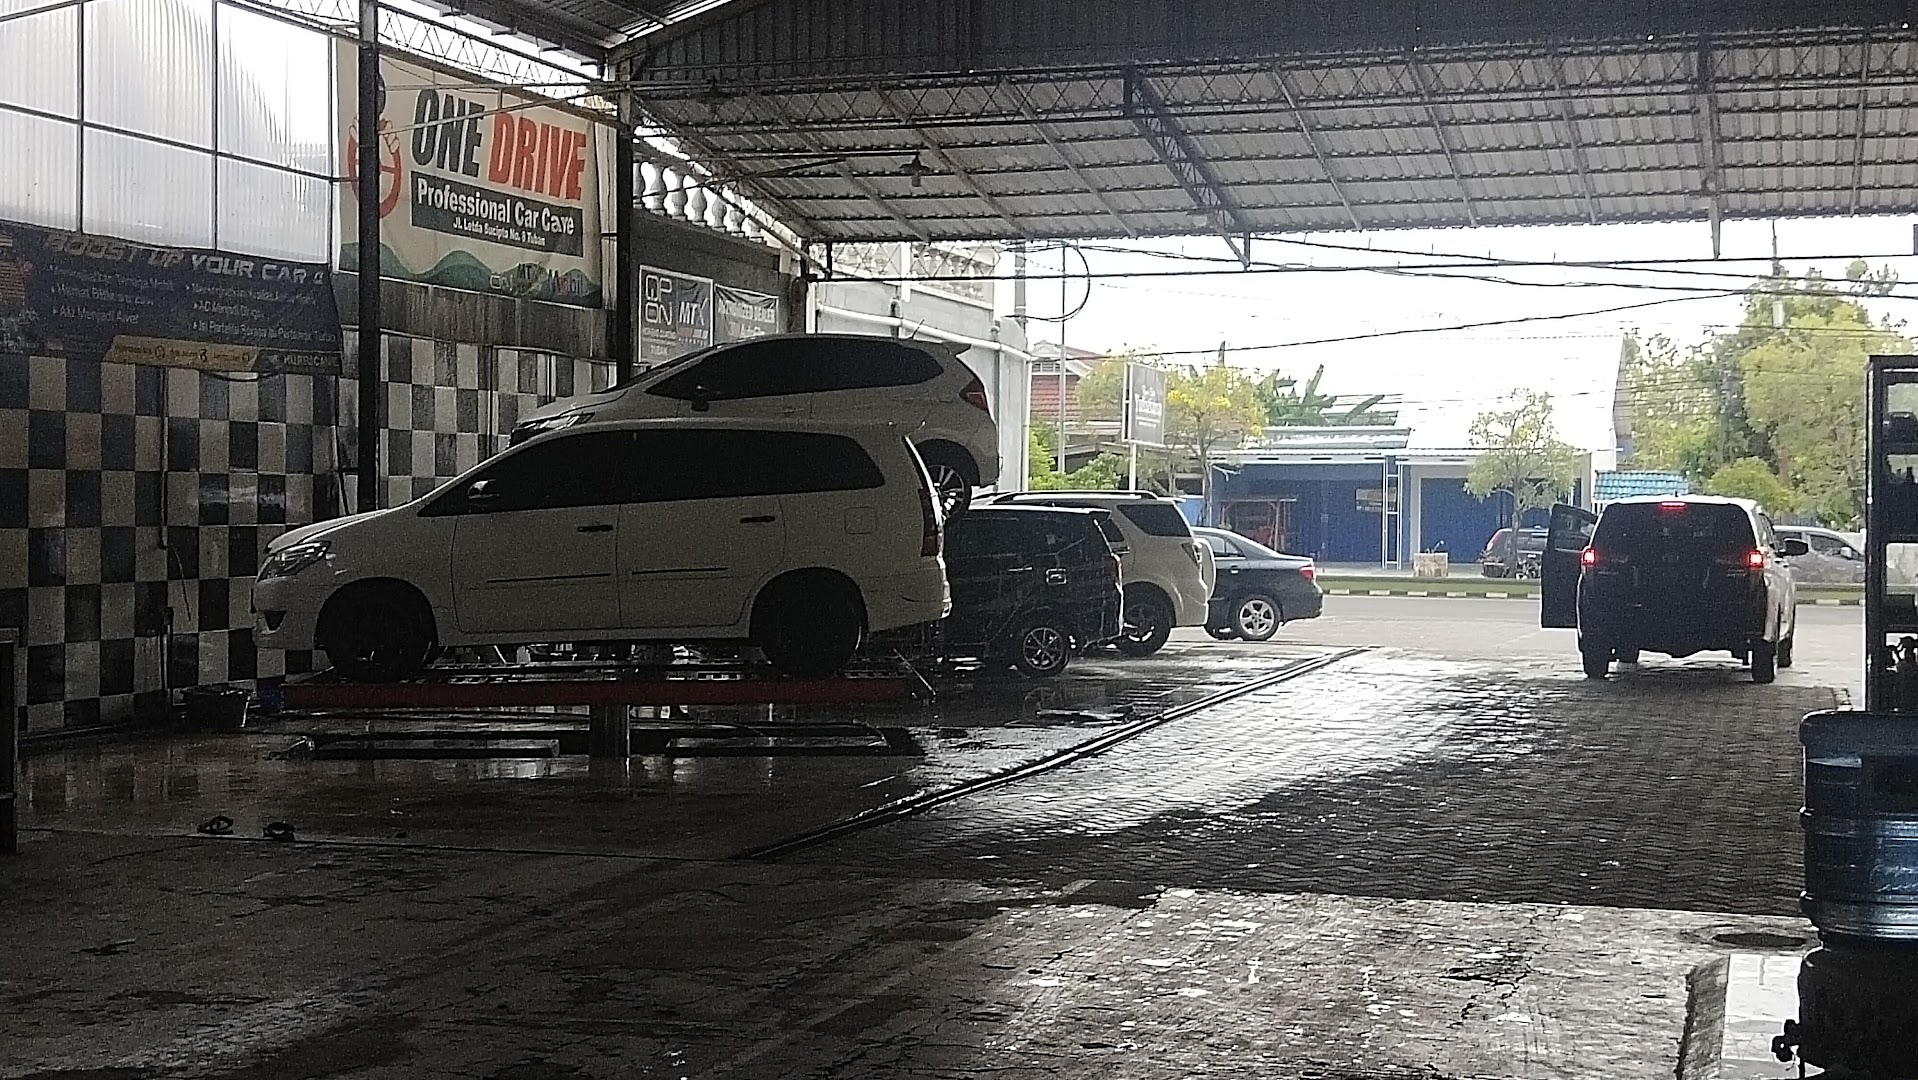 Gambar One Drive Professional Car Wash